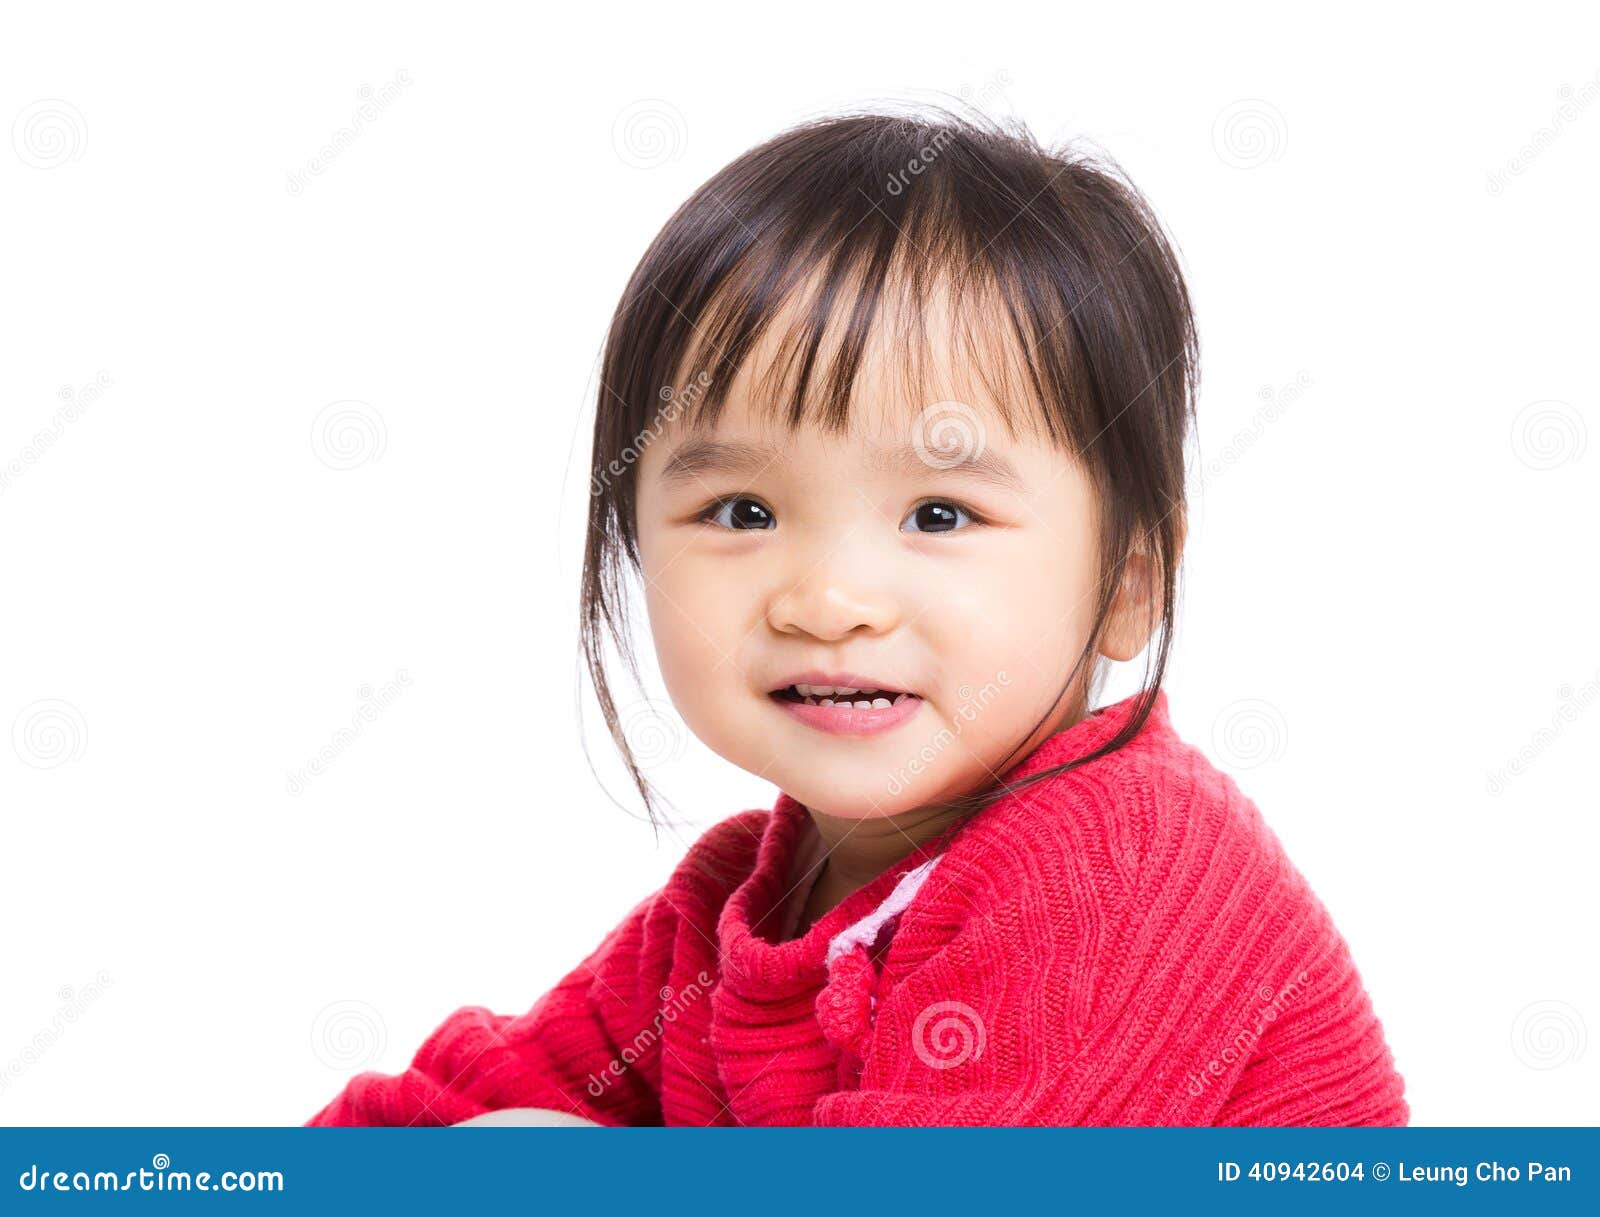 Asian little girl smile stock photo. Image of girl, adorable - 40942604